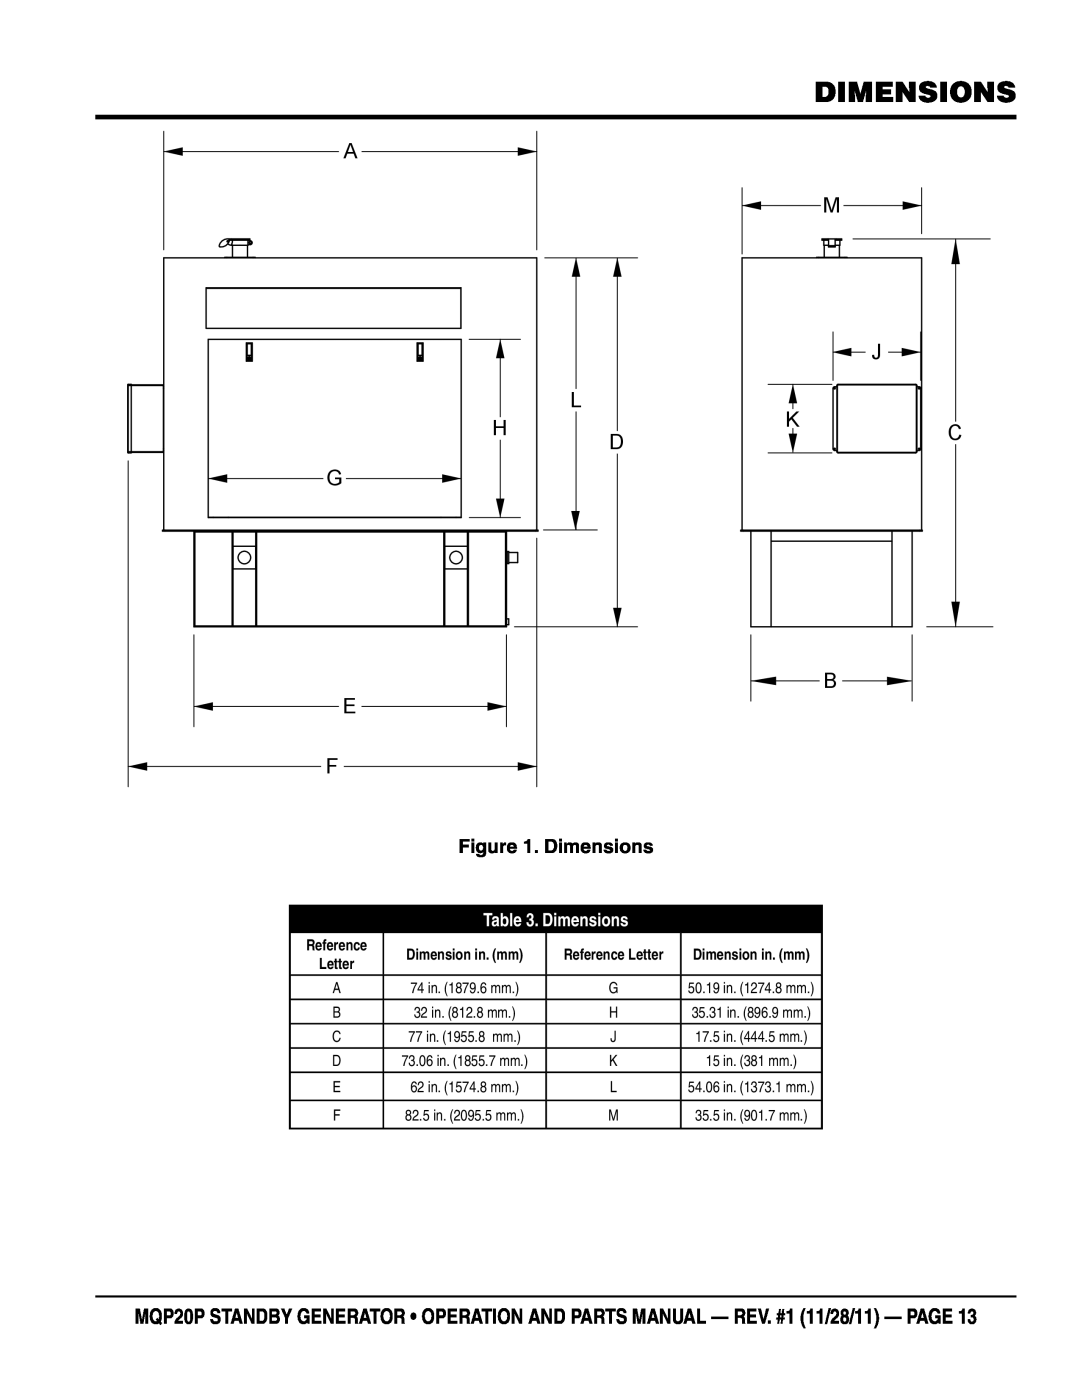 Multiquip MQP20P manual Dimensions 